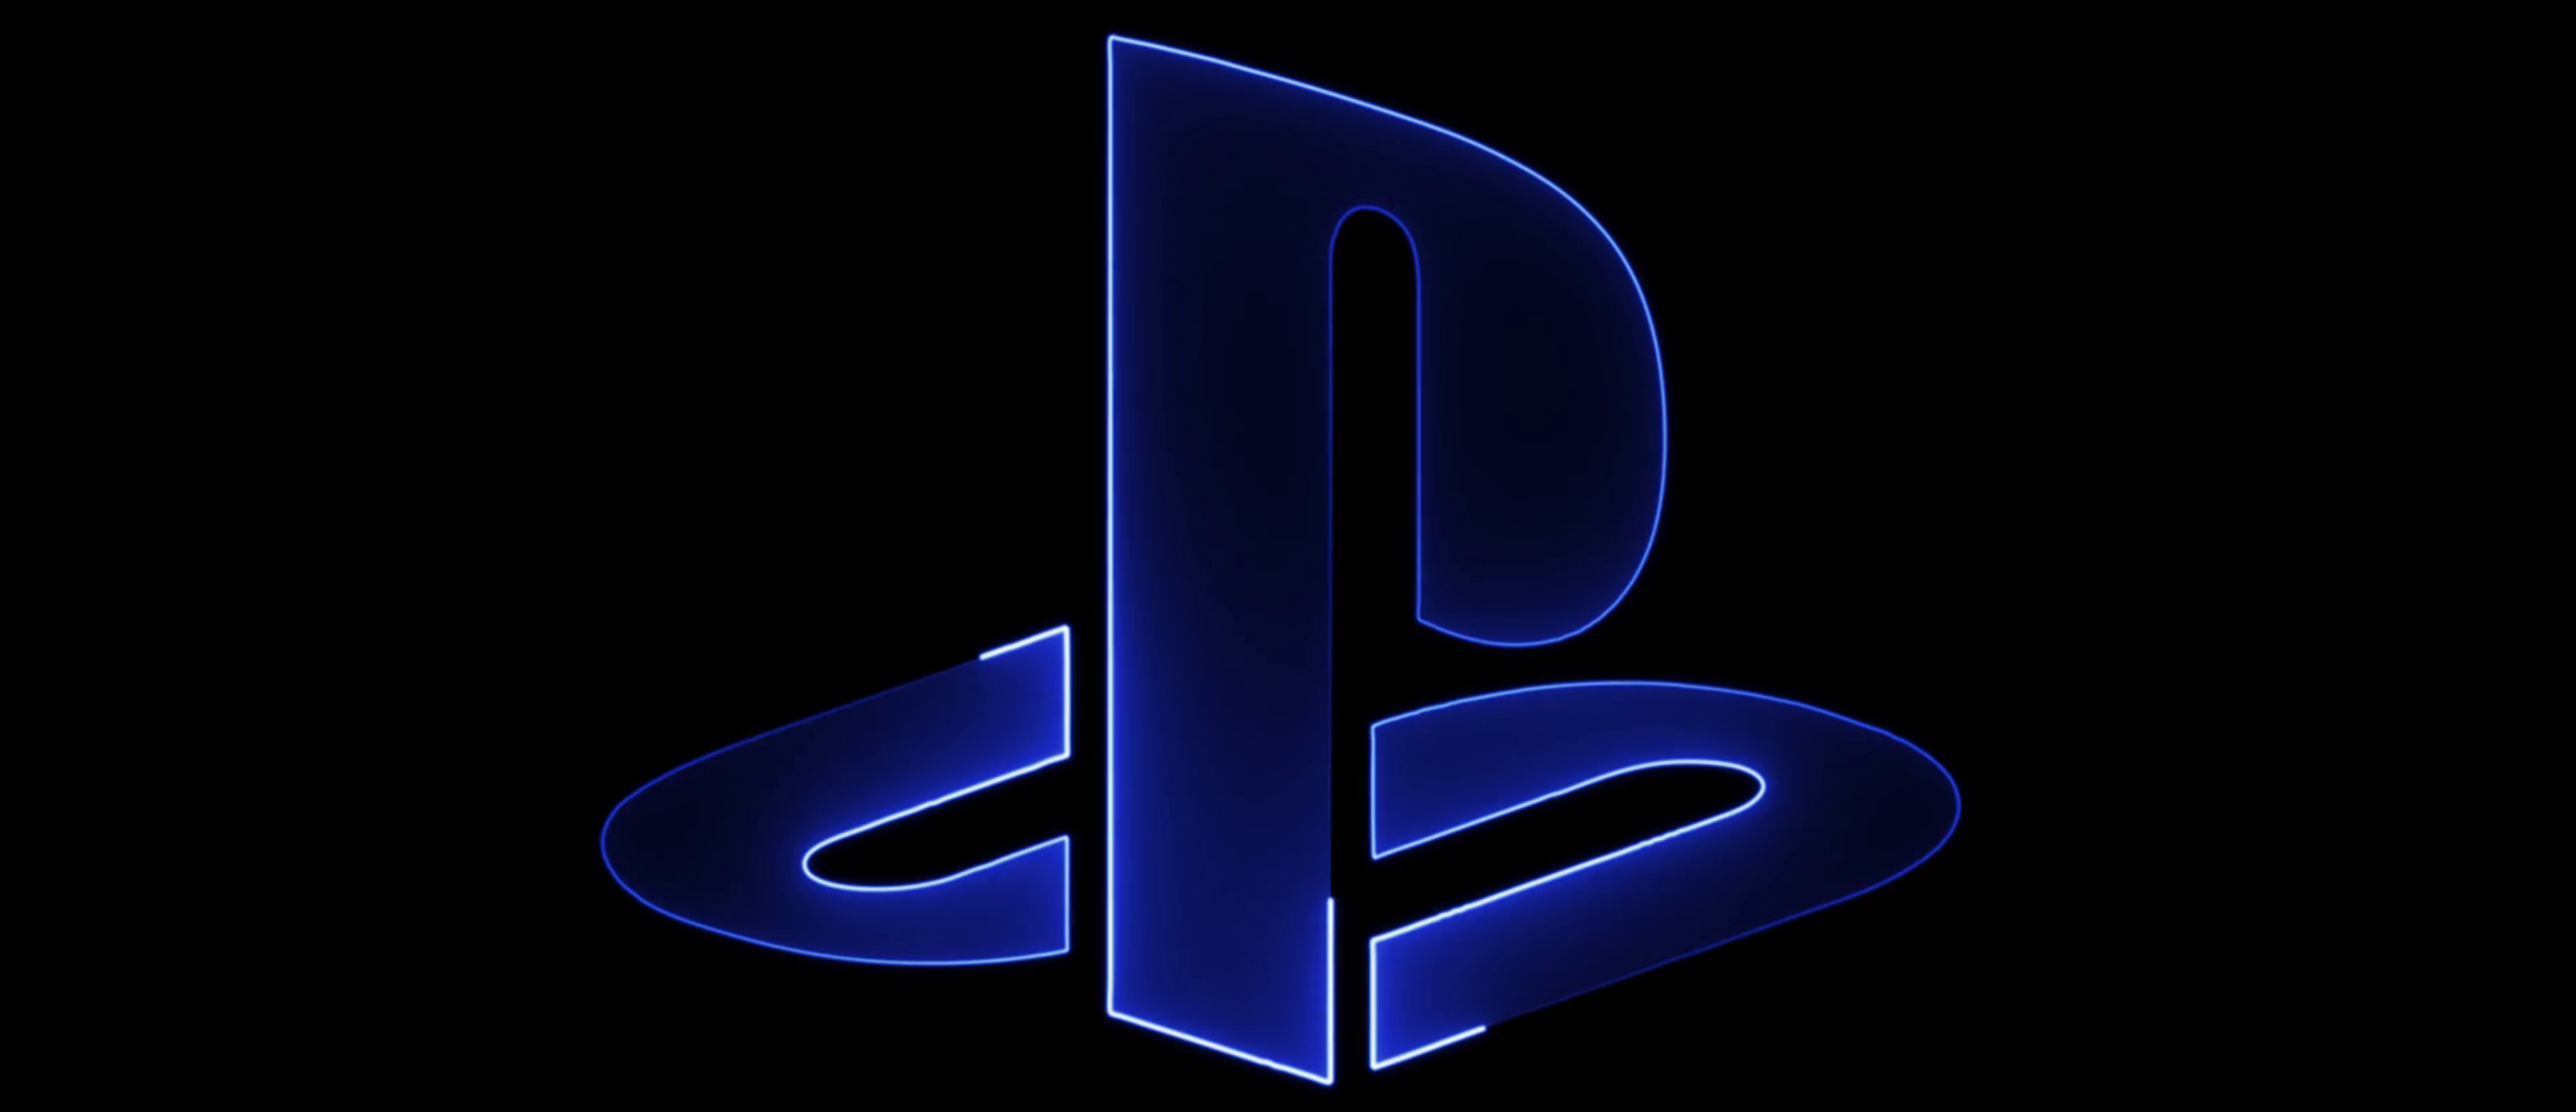 Logo 5 4. Sony PLAYSTATION логотип ПС 4. Логотип сони плейстейшен 5. PLAYSTATION 5 значок. Ps4 ps5 логотип.